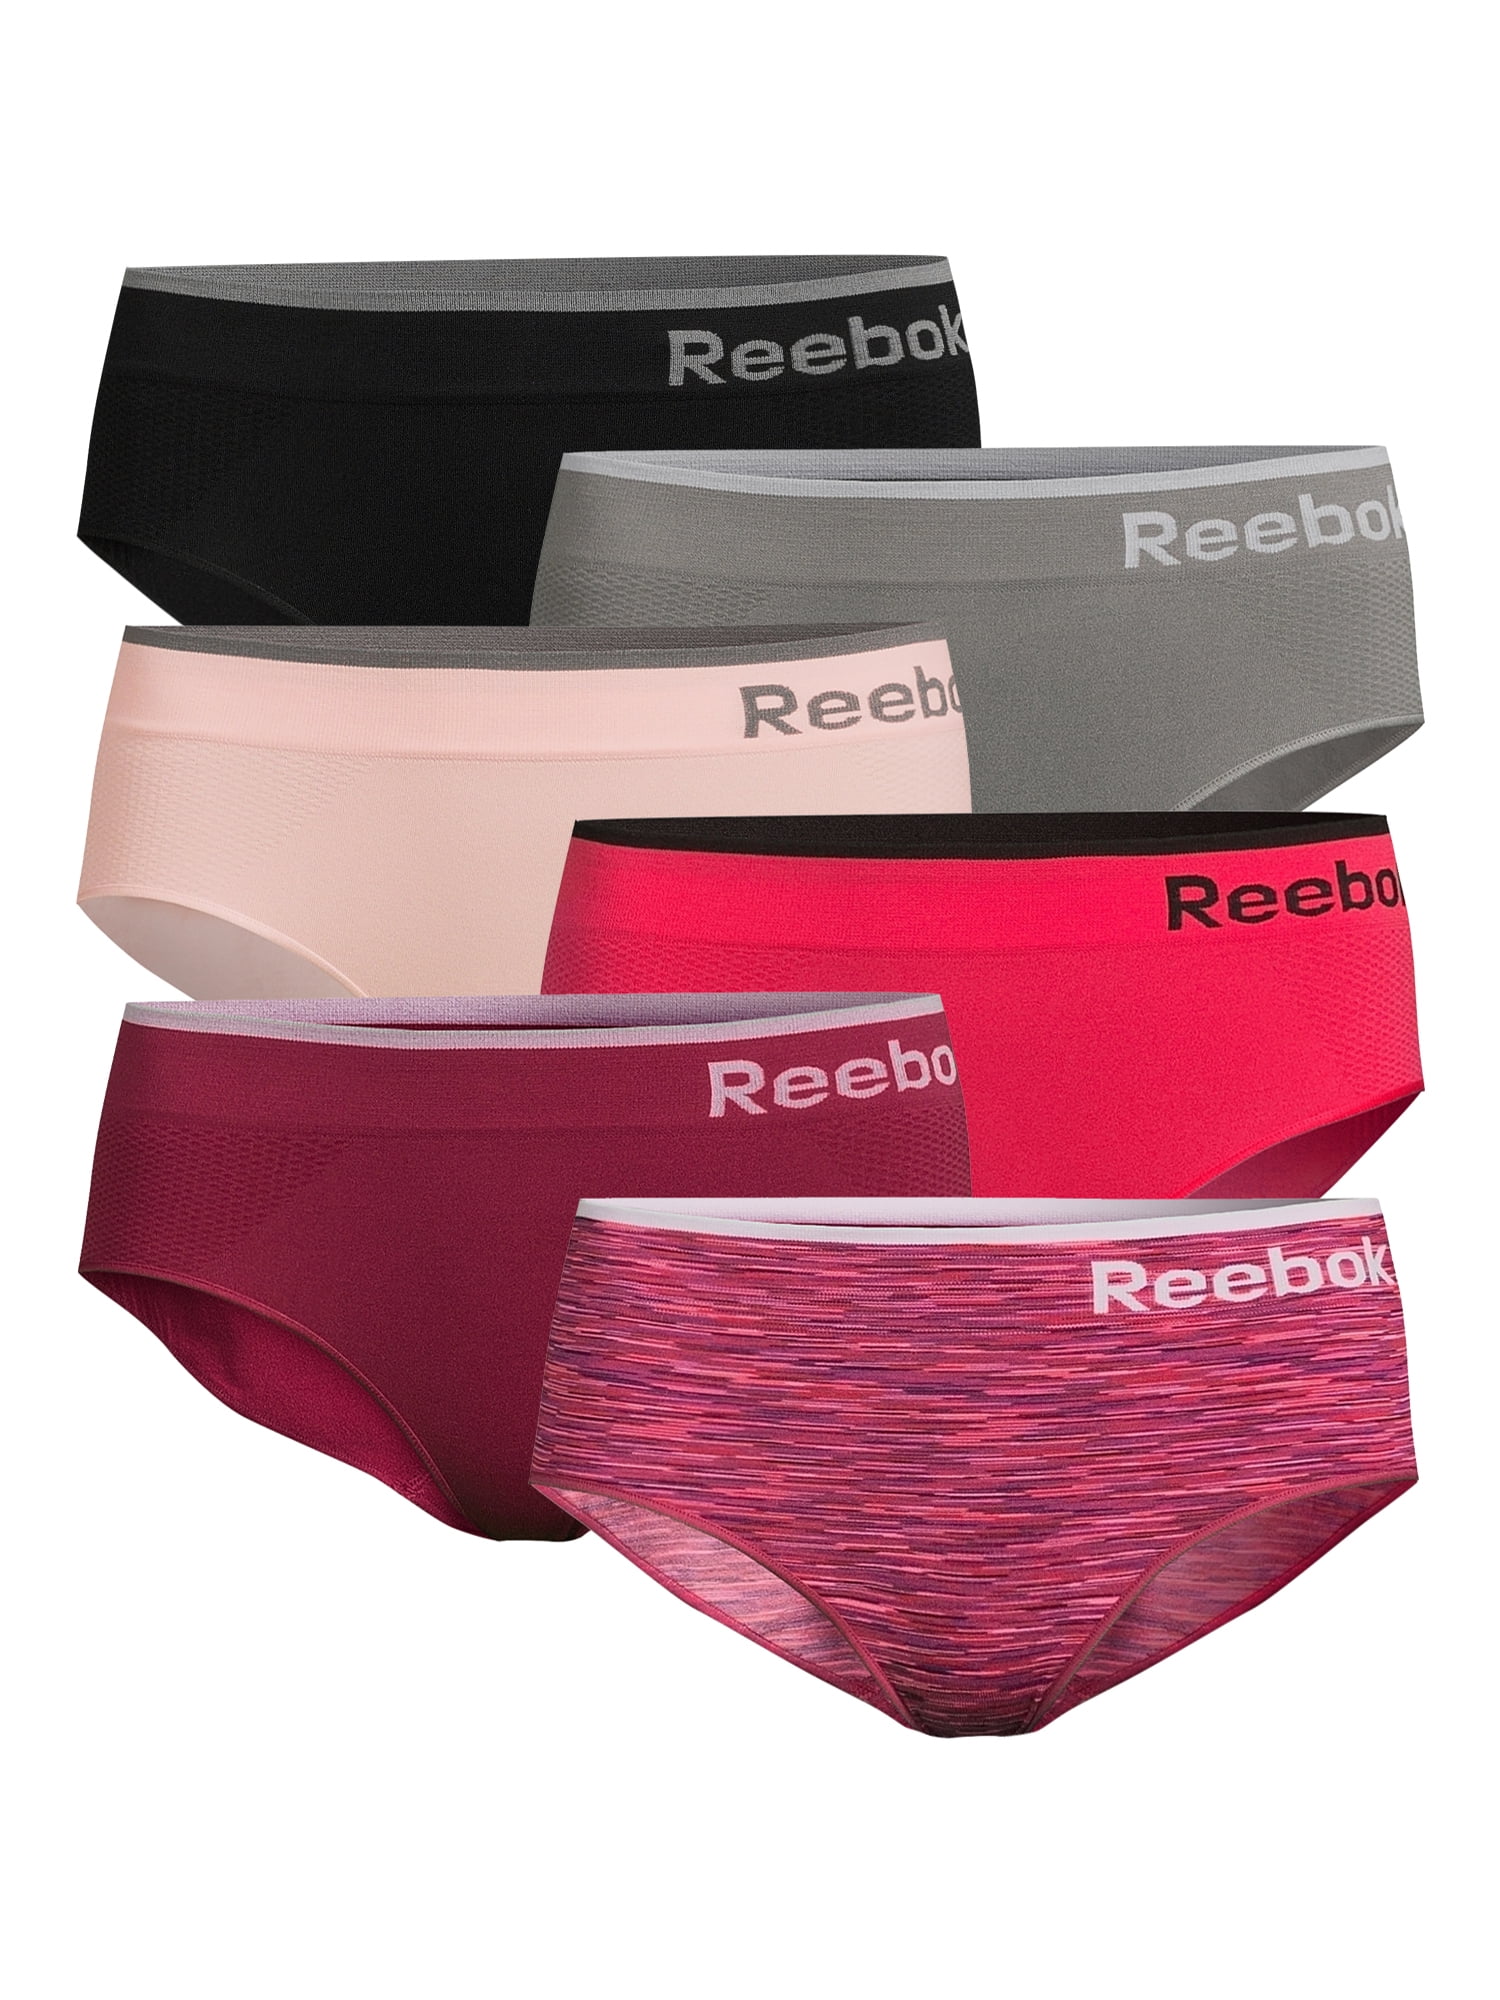 Reebok Women's Underwear - Seamless Thong 6 Pack Mauritius